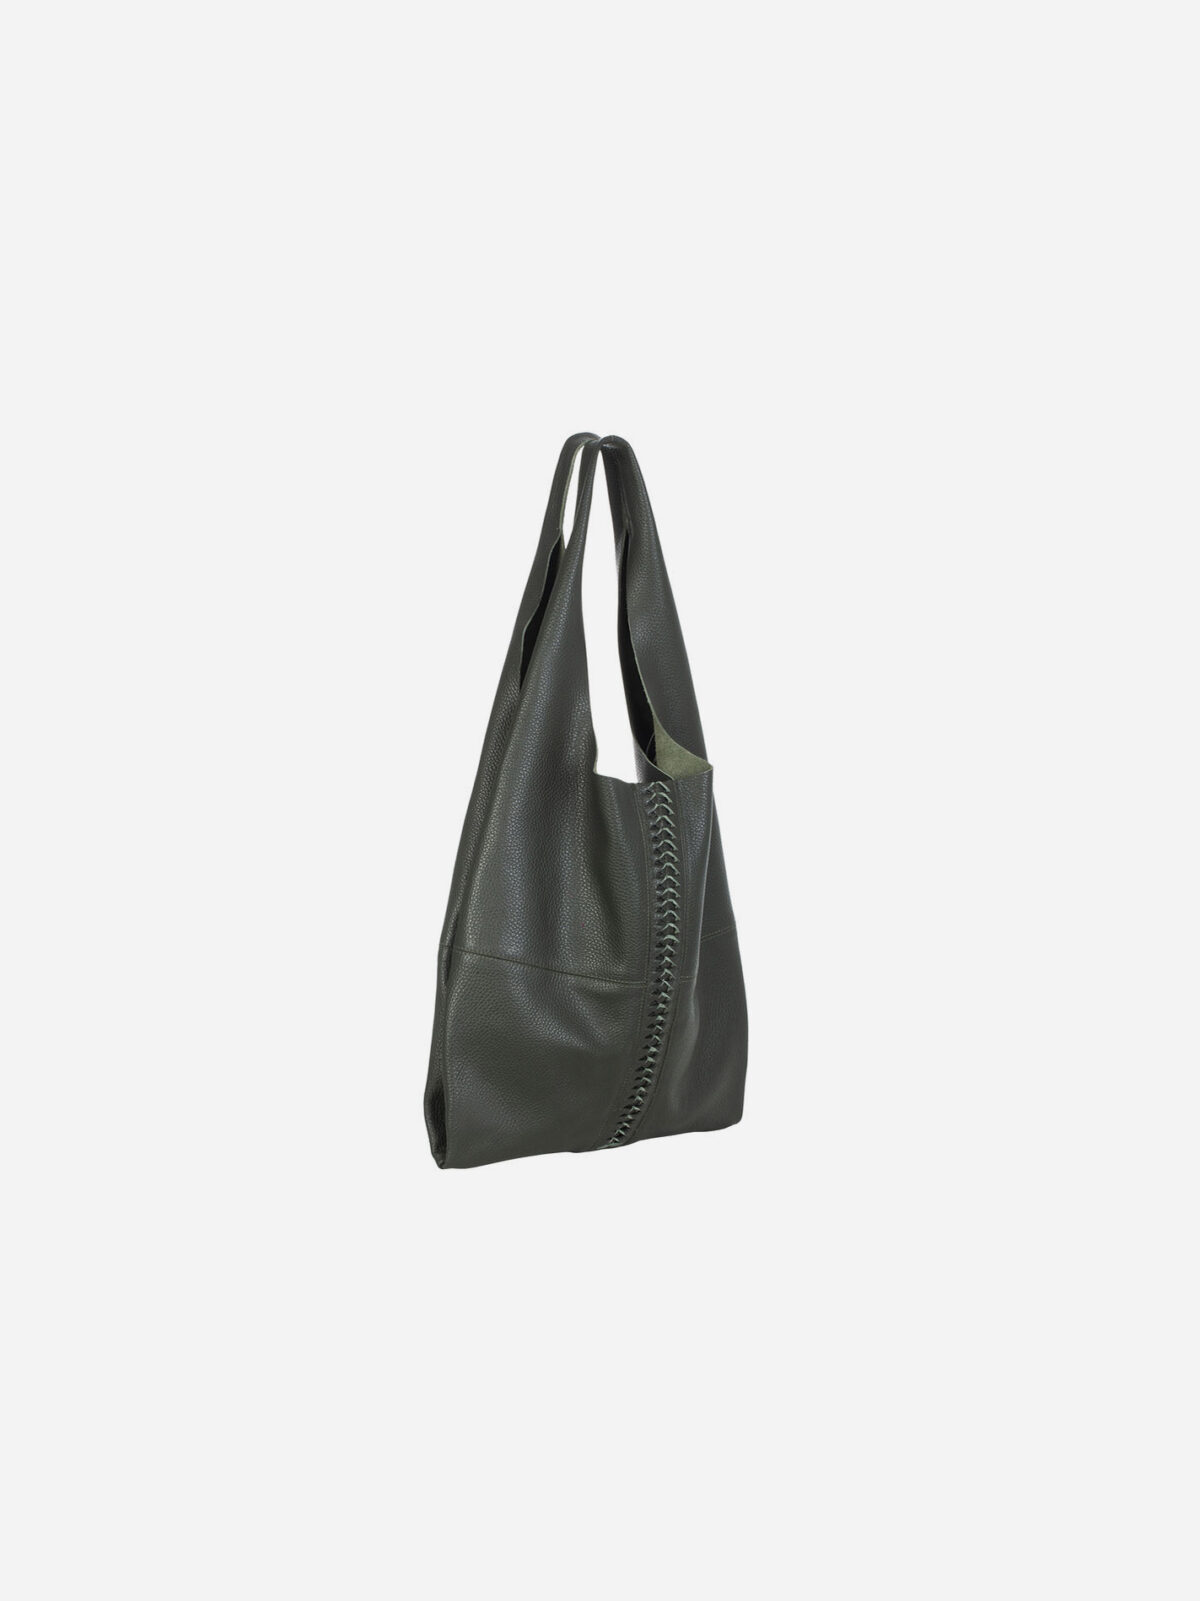 IDEM_Pine-Green-tote=leather-bag-handmade-park-house-matchboxathens